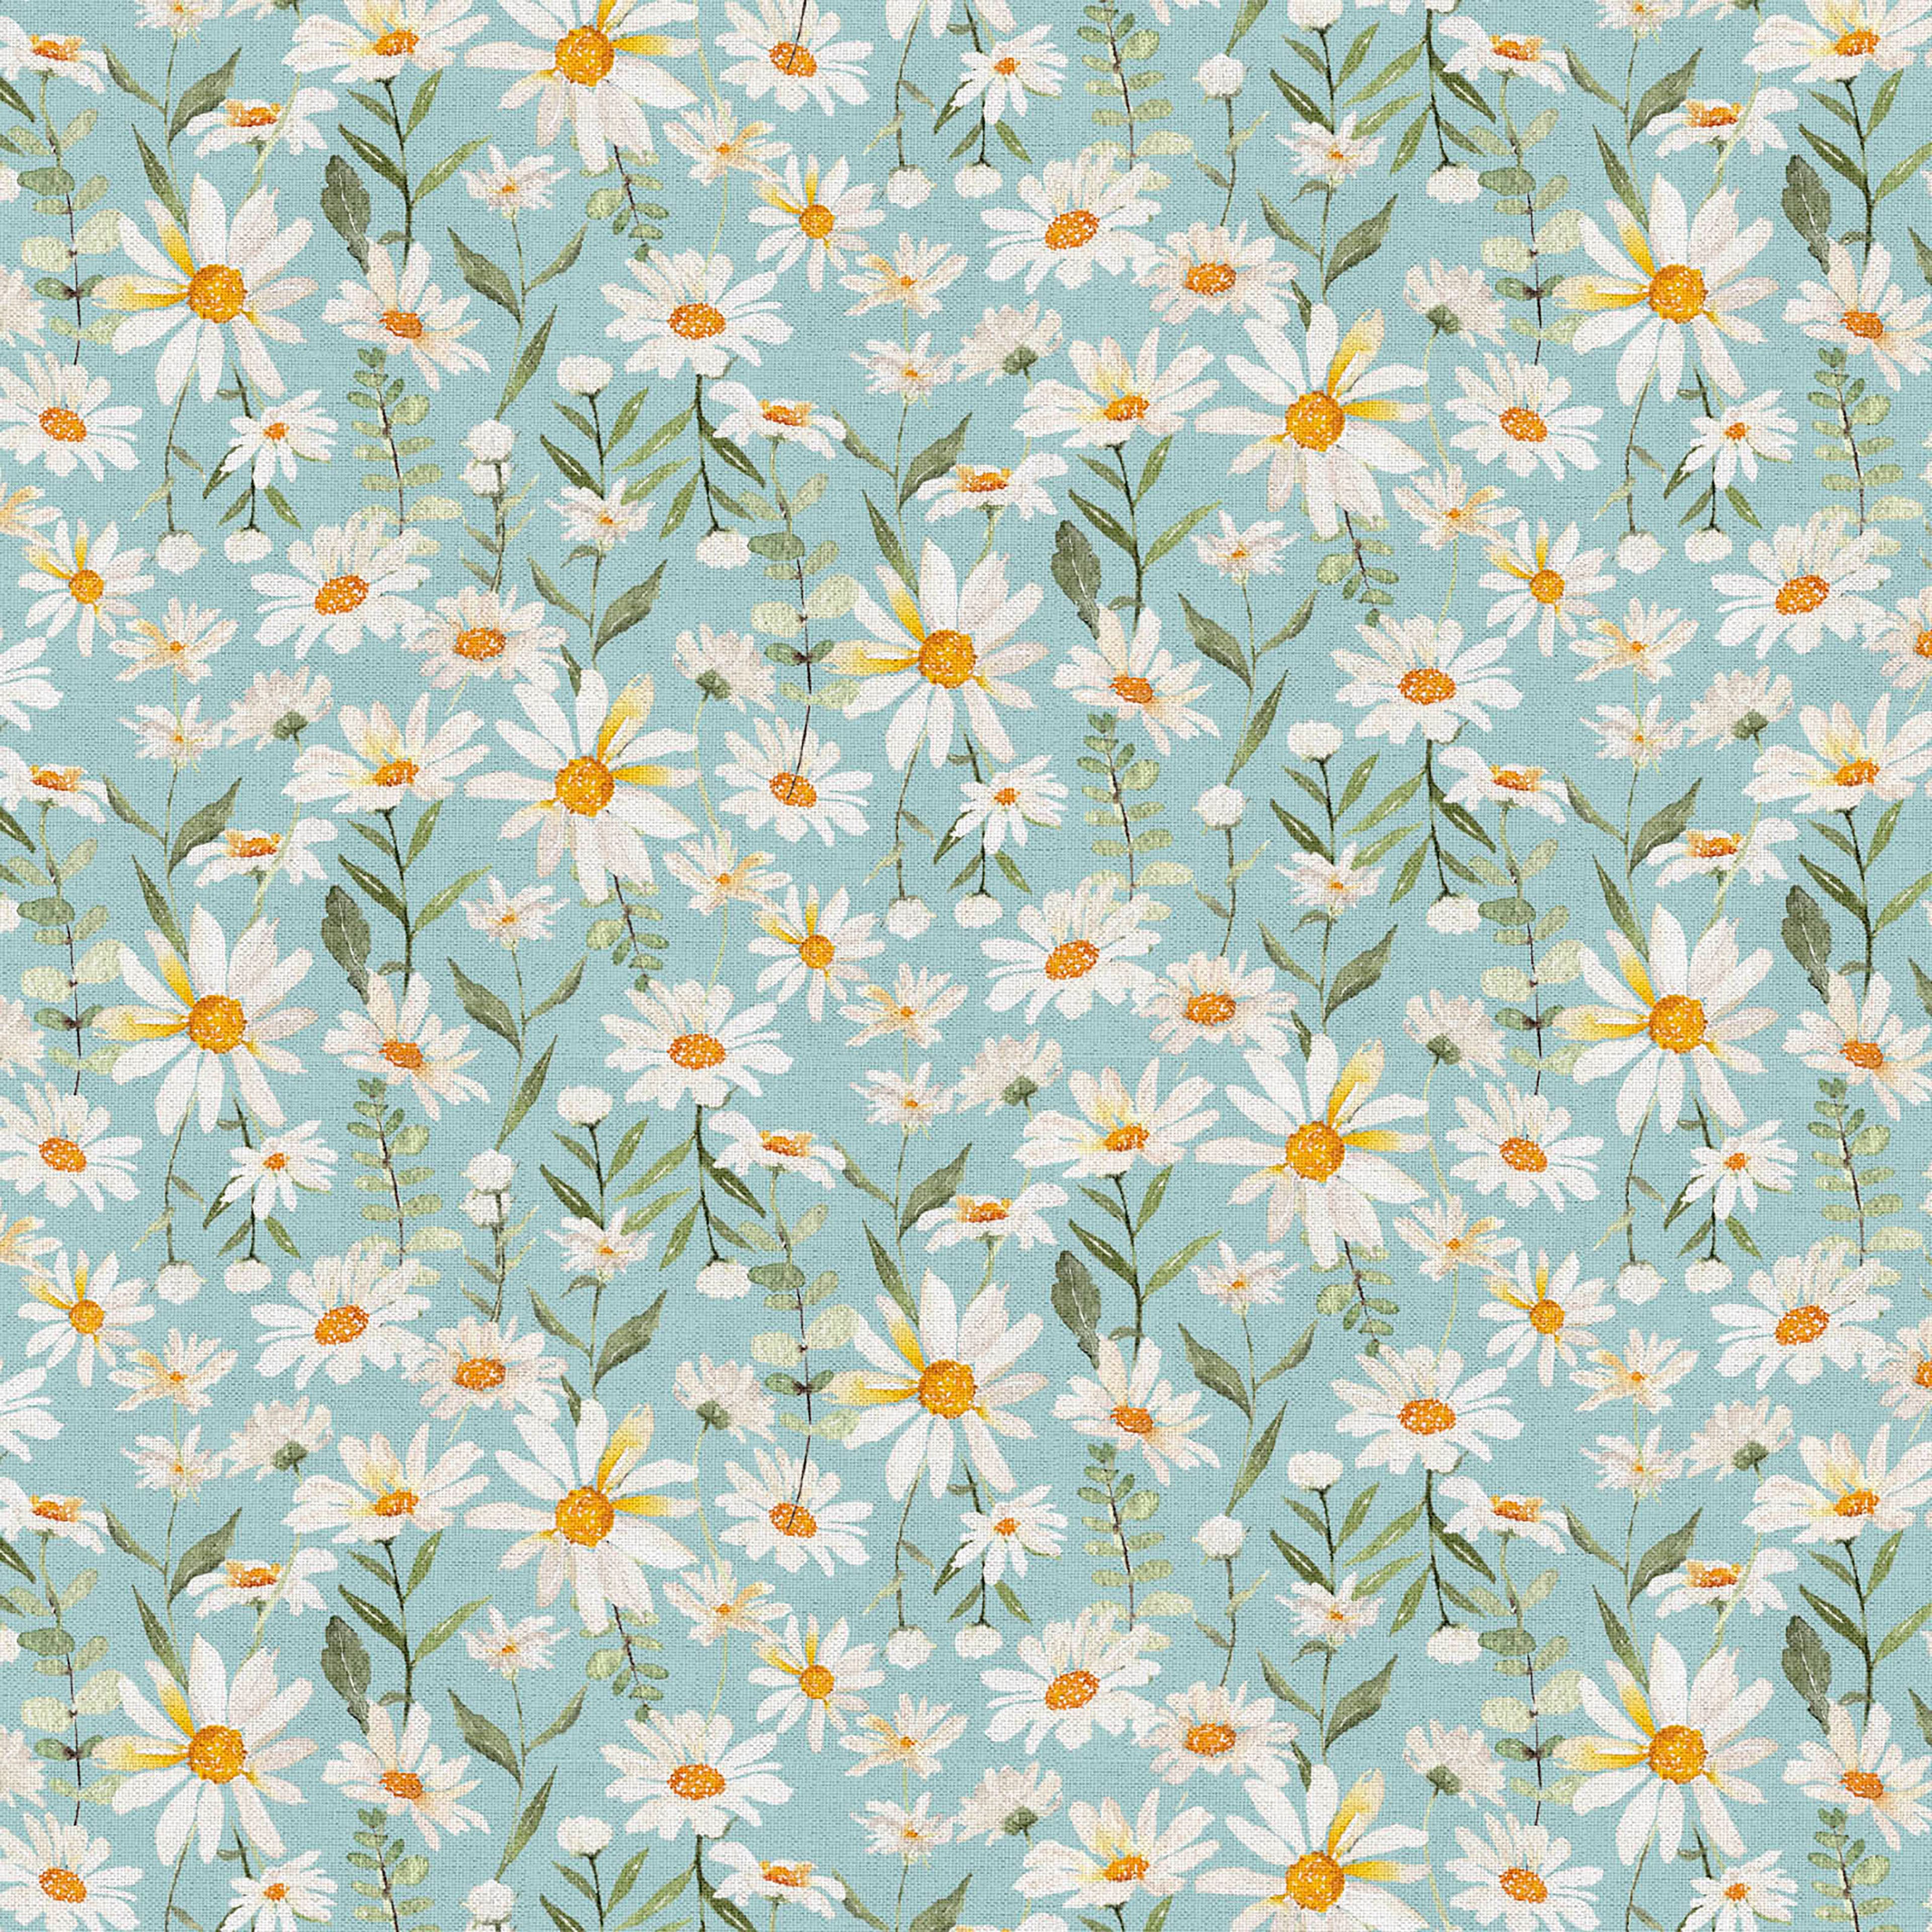 Fabric Editions Daisy Garden Cotton Fabric